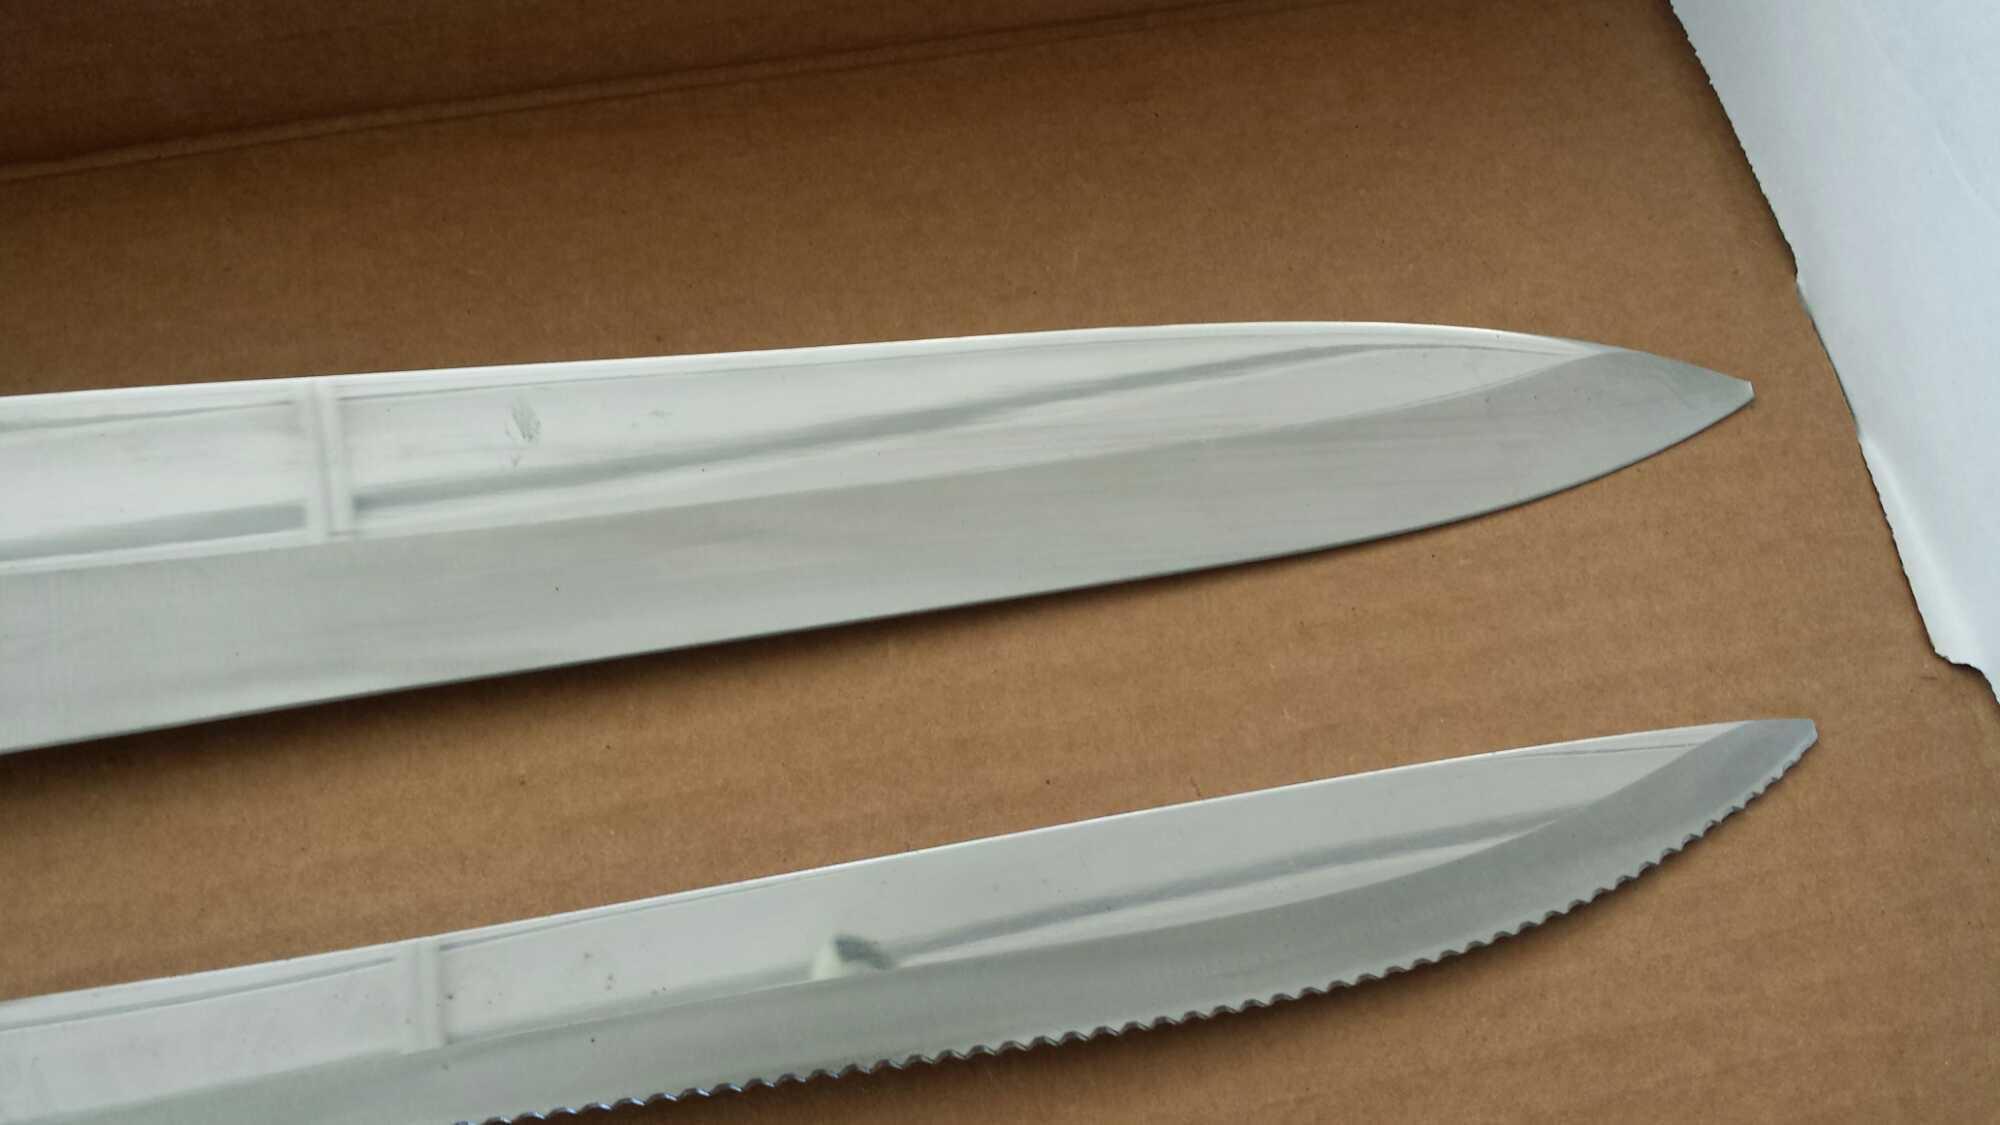 CUTCO 5 Pc Knife Set - 1725, 1723, 1722, 1721, 1720